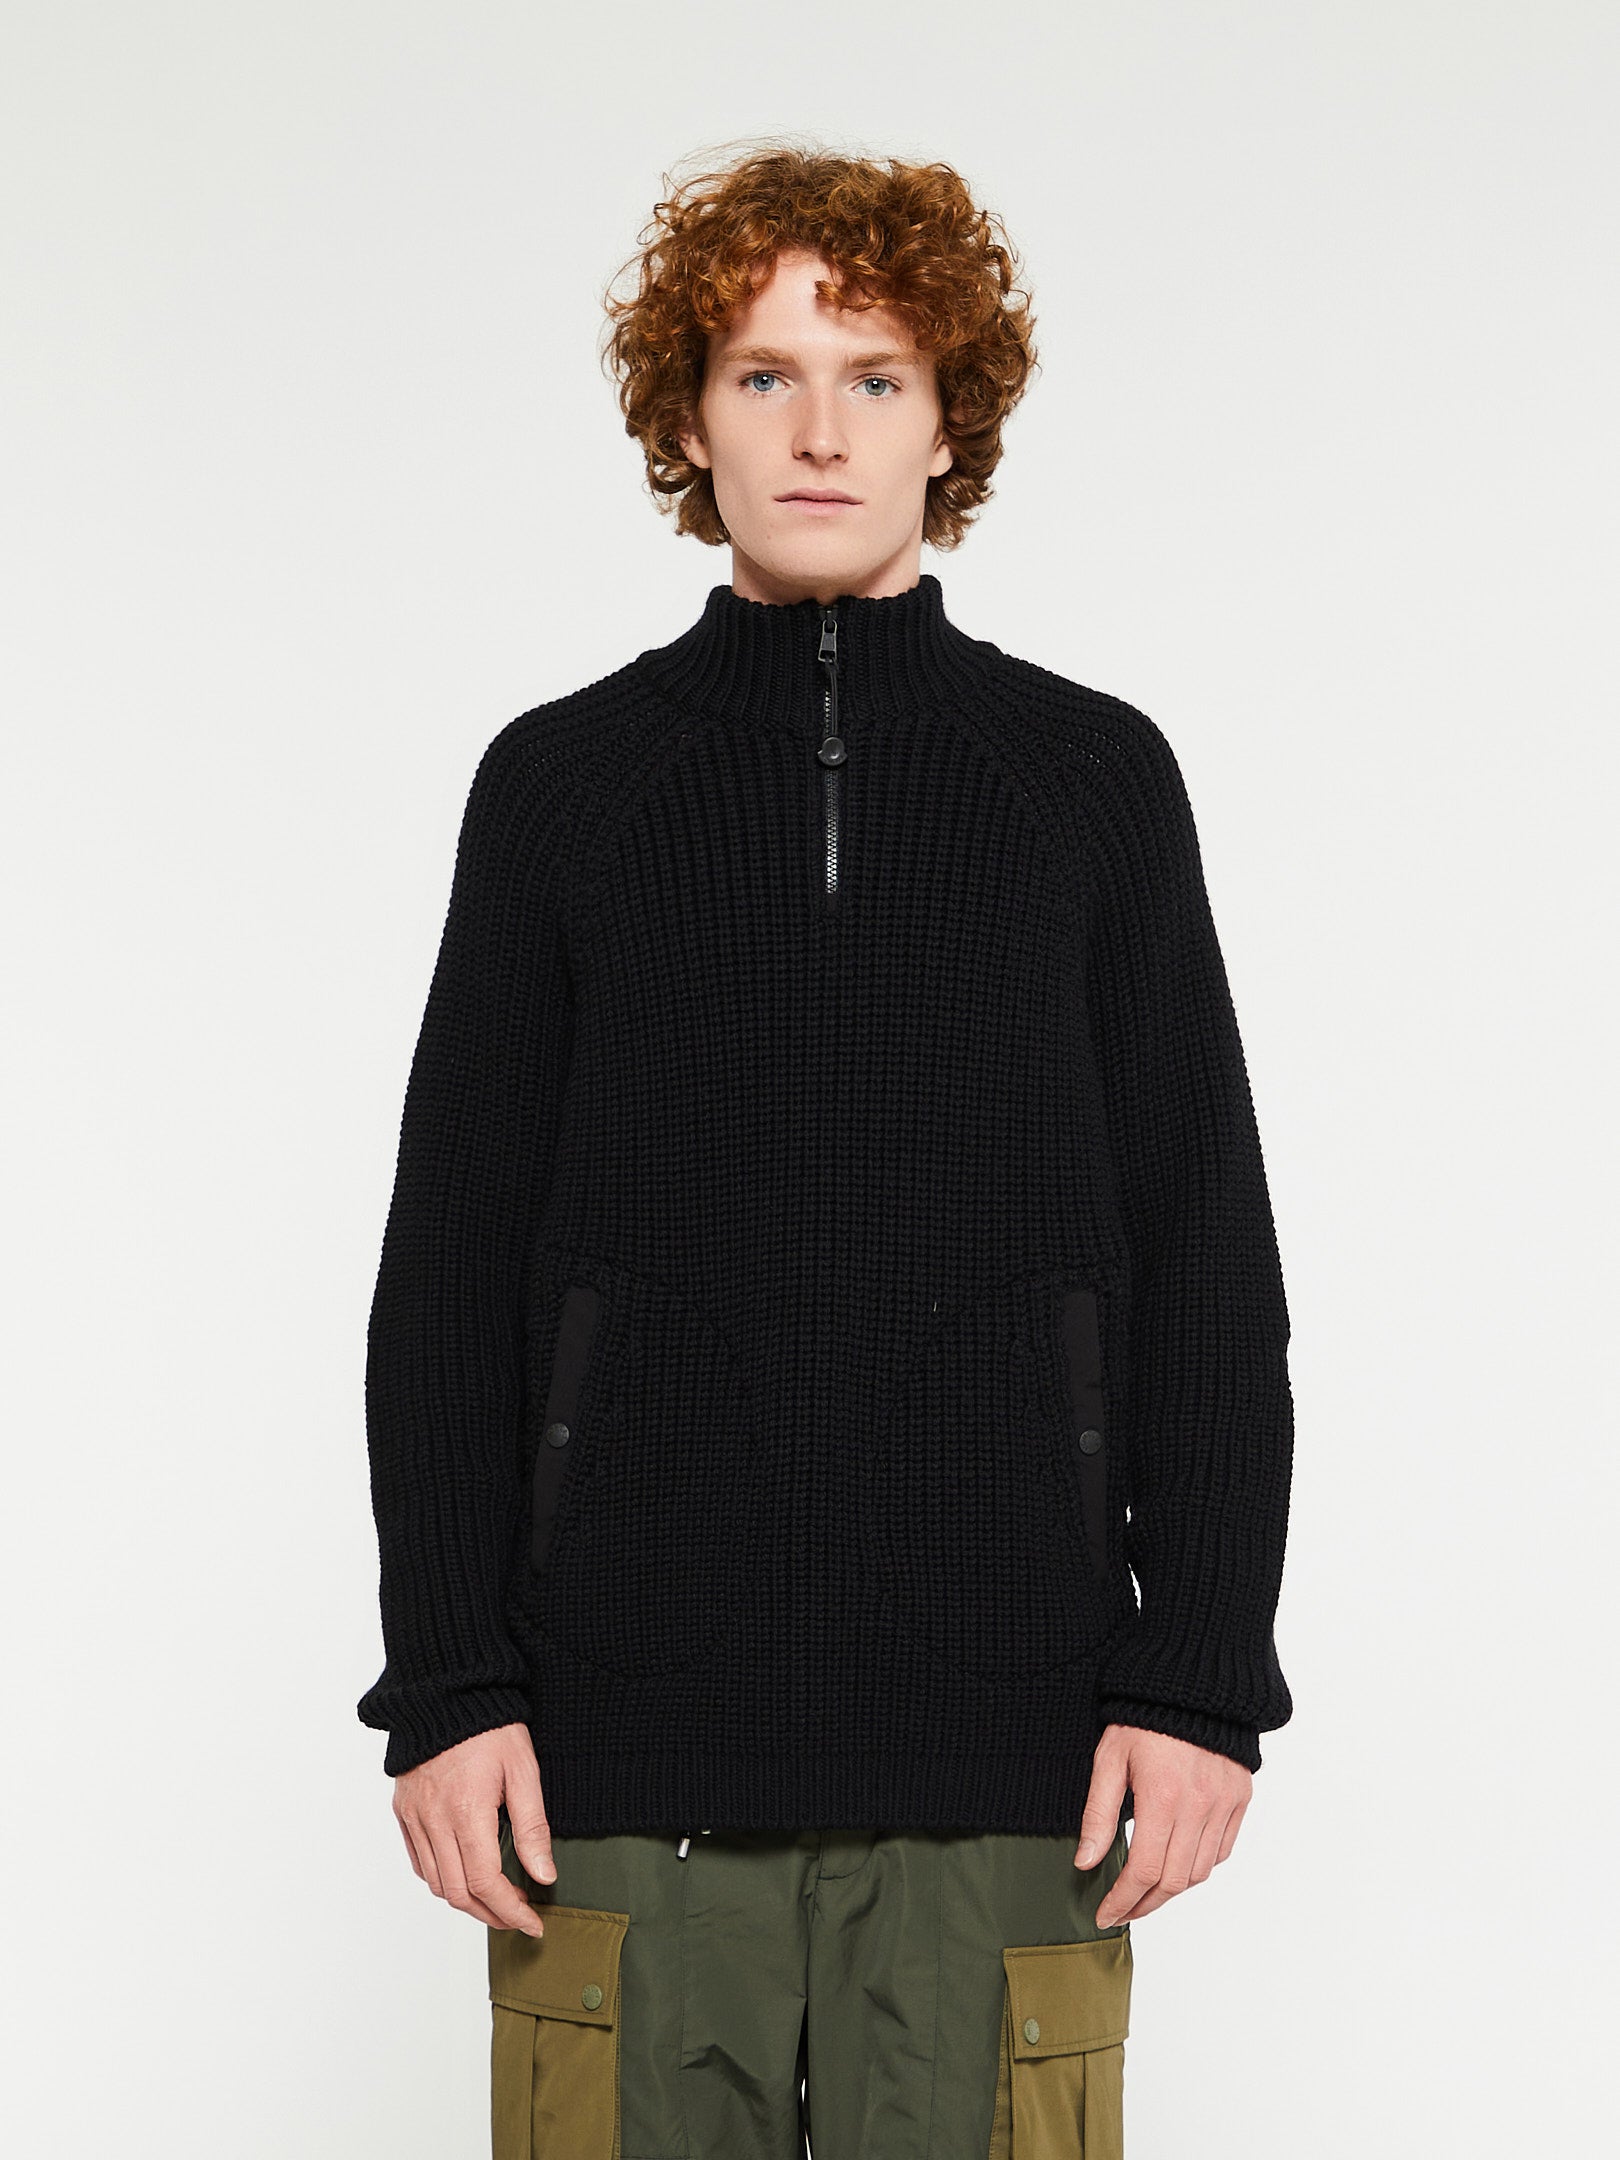 Moncler Genius x Pharrell Williams - Wool Sweater in Black